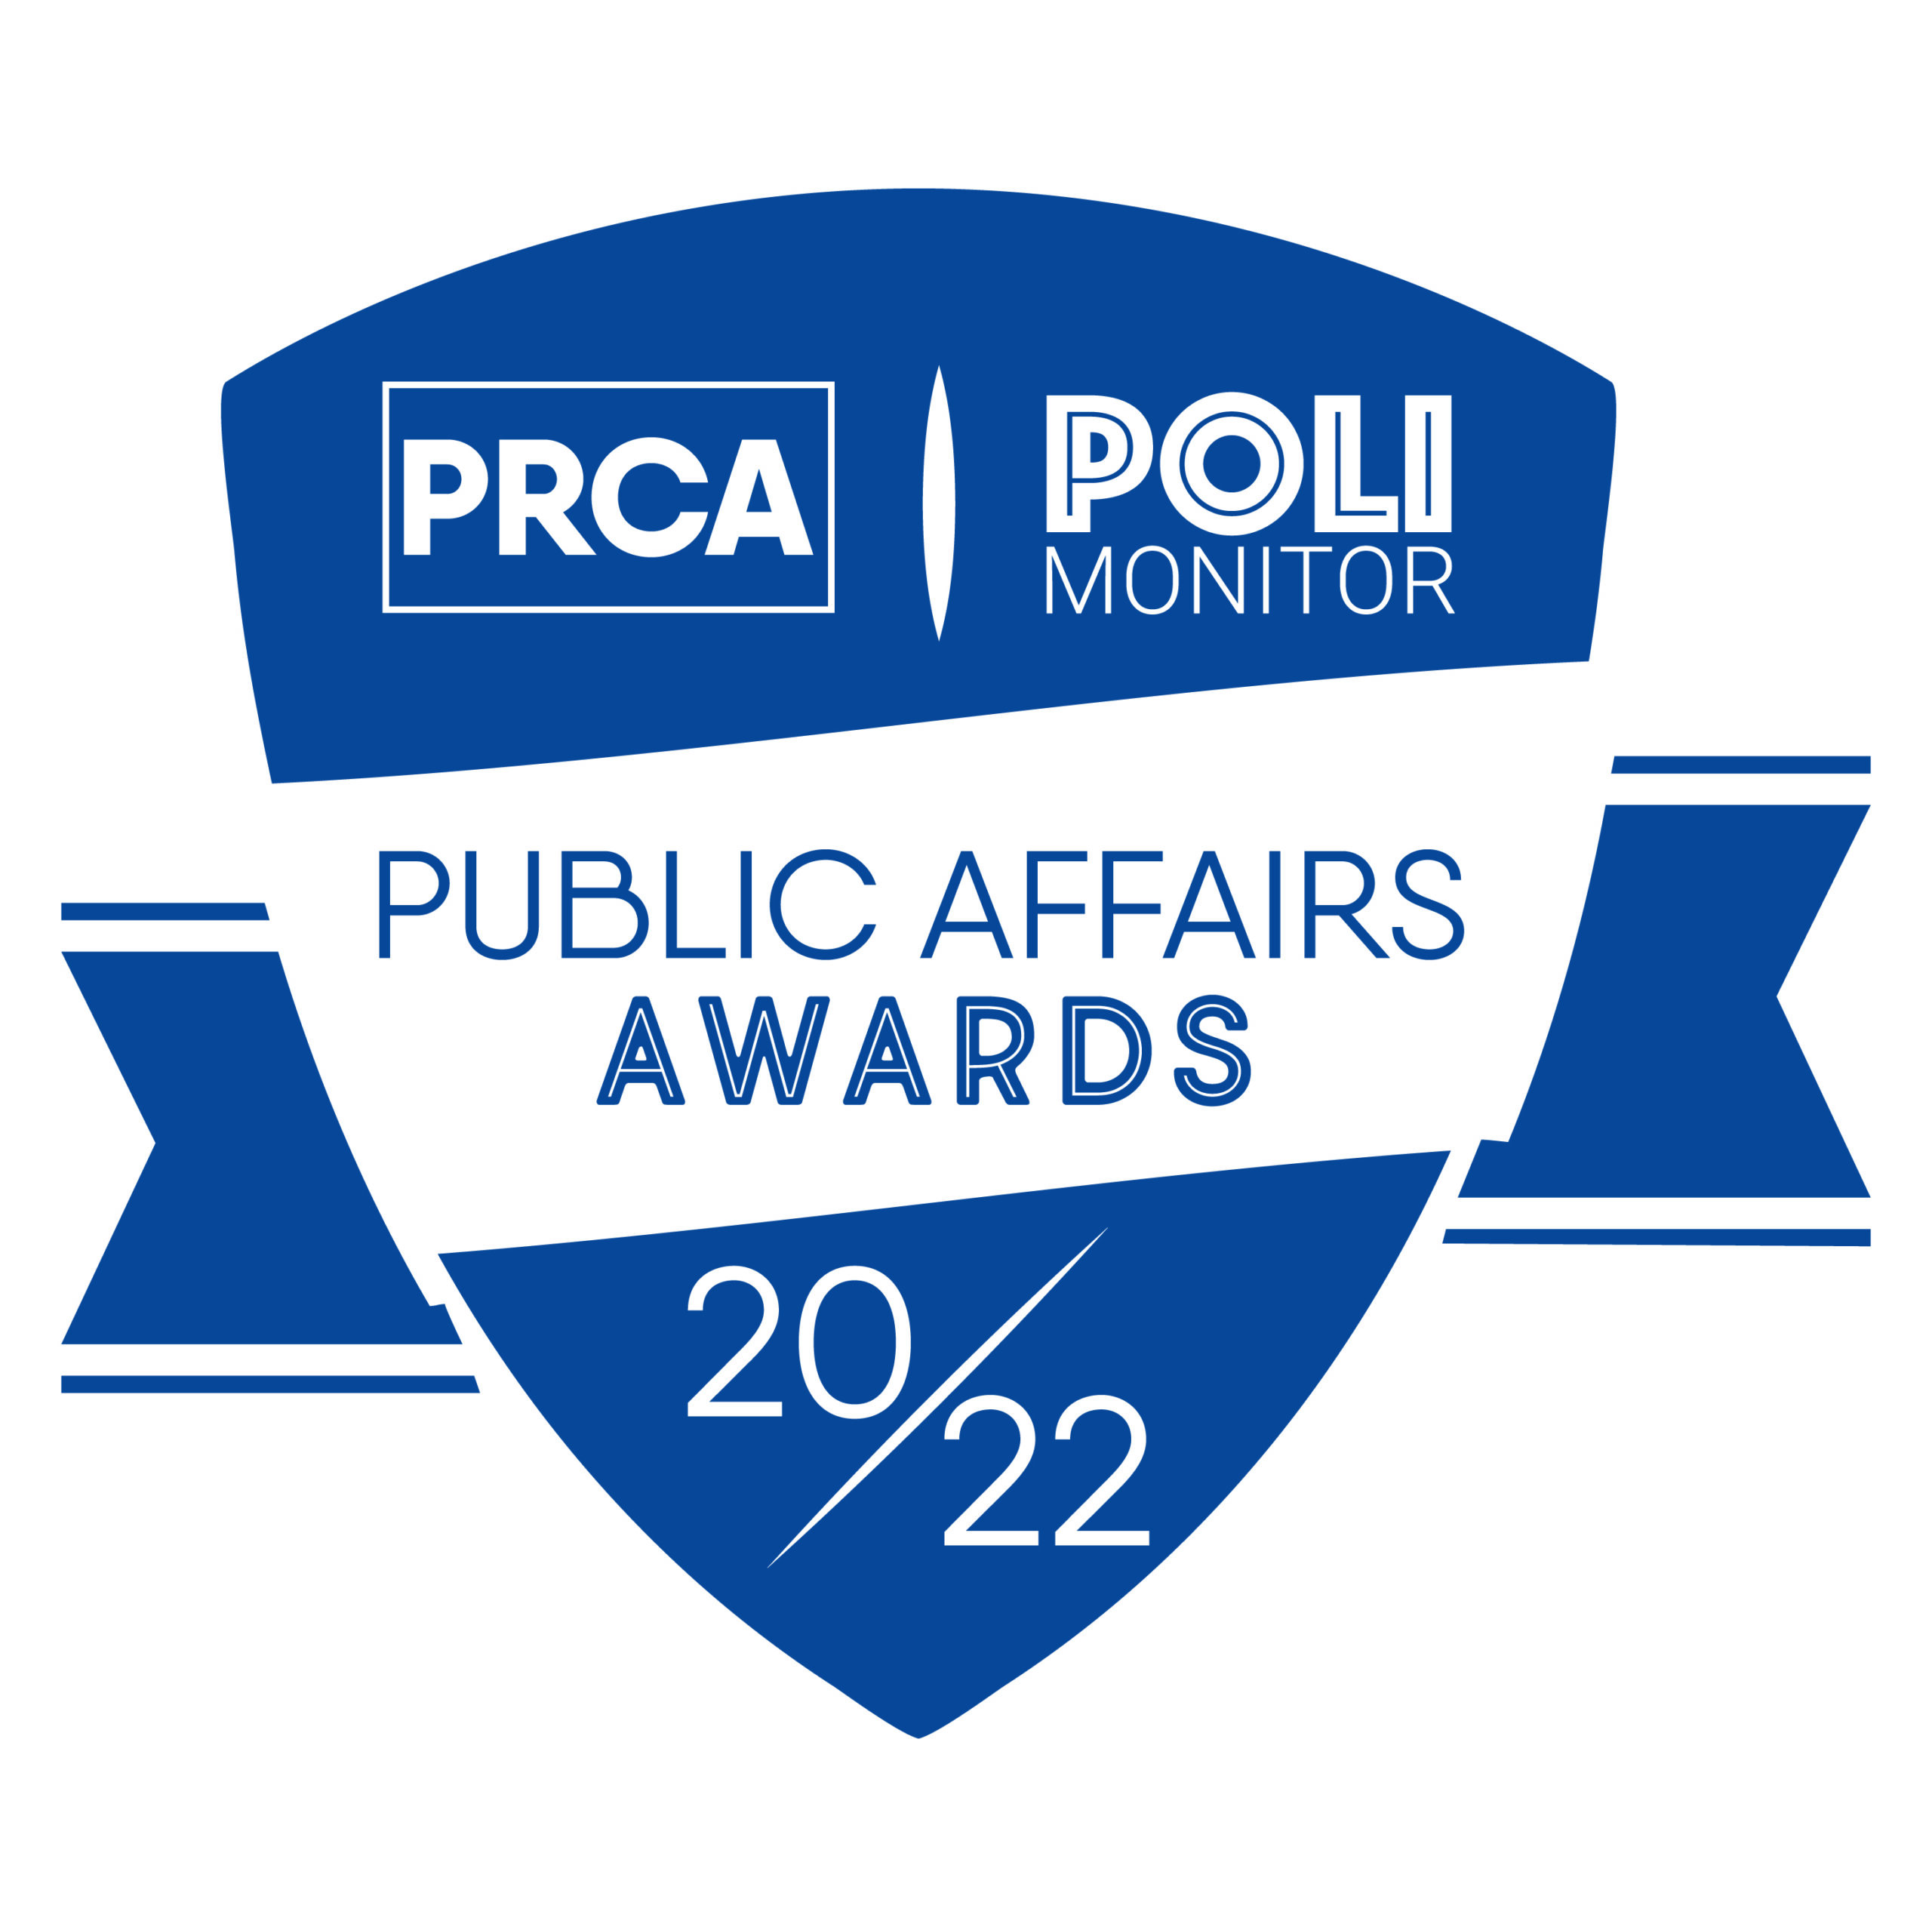 PRCA-PoliMonitor Public Affairs Awards 2022